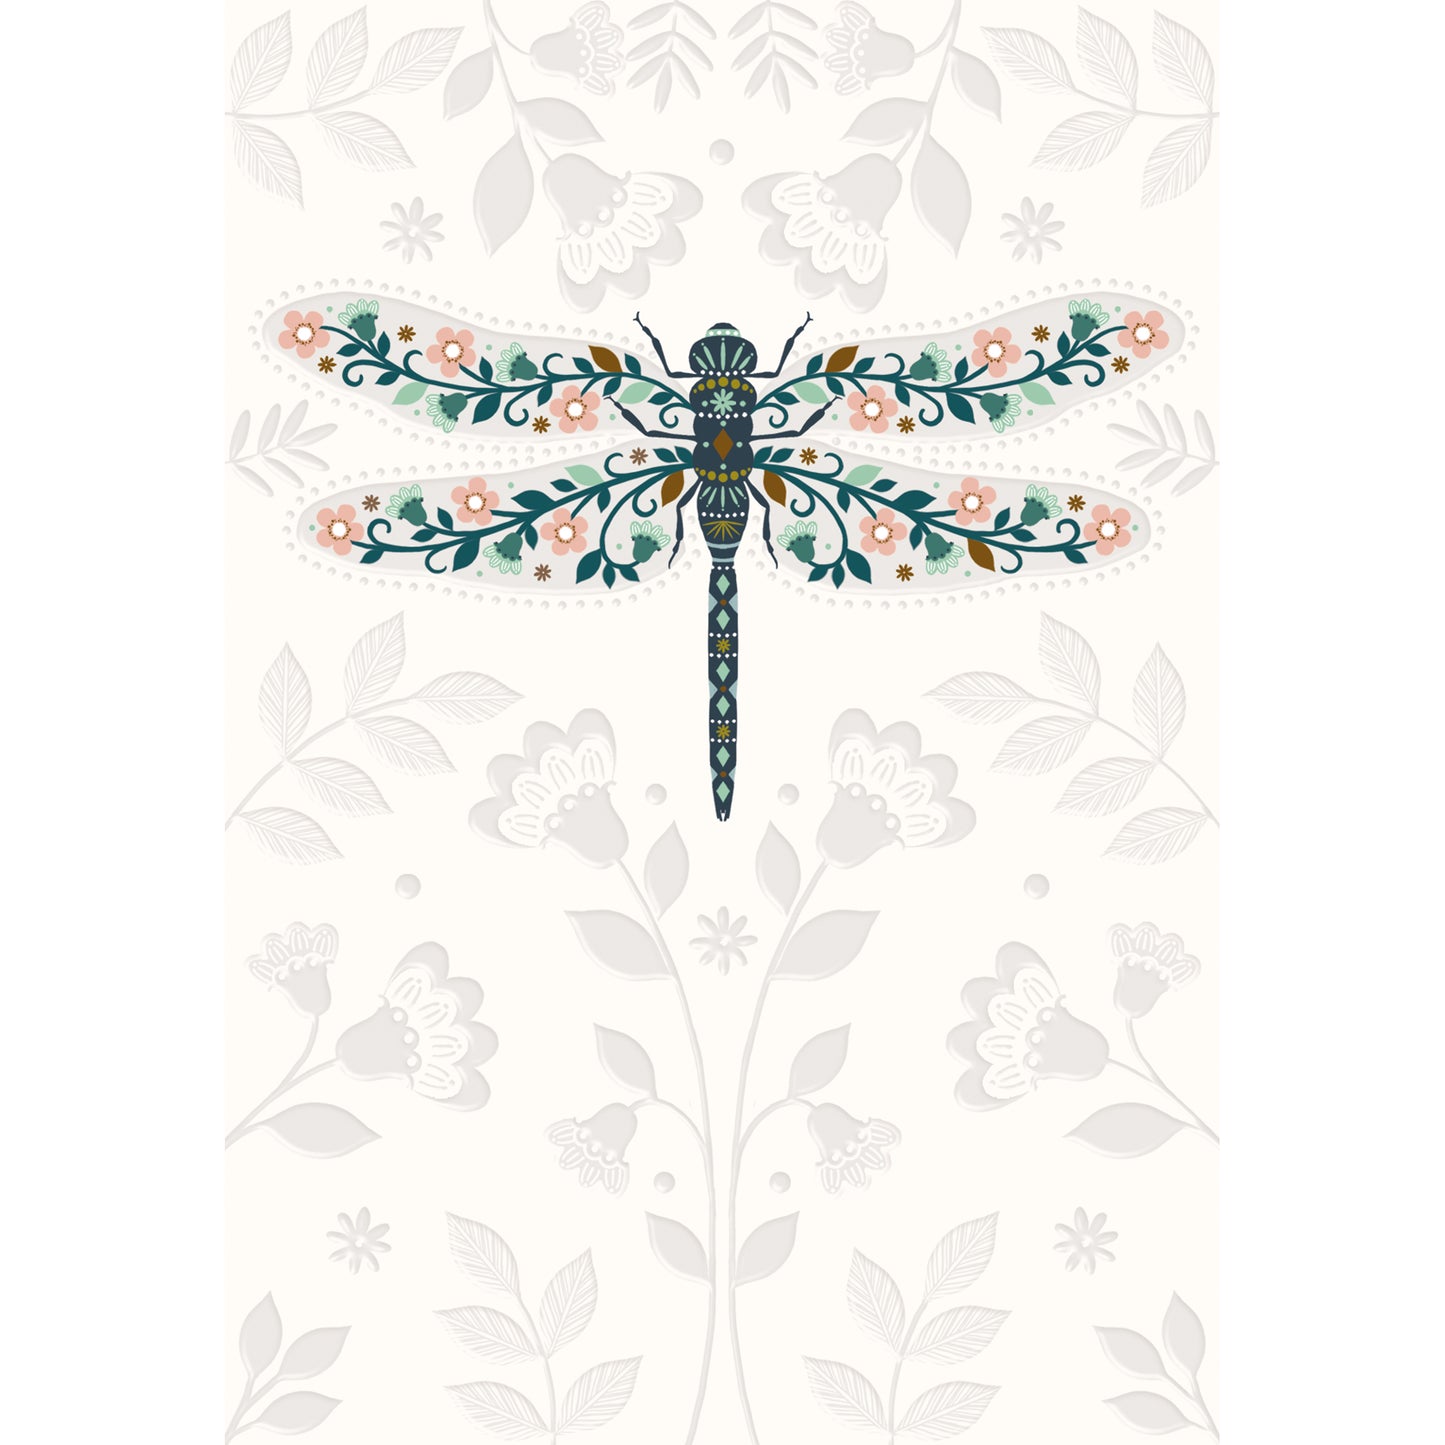 Folk & Fauna Card Collection -Dragonfly